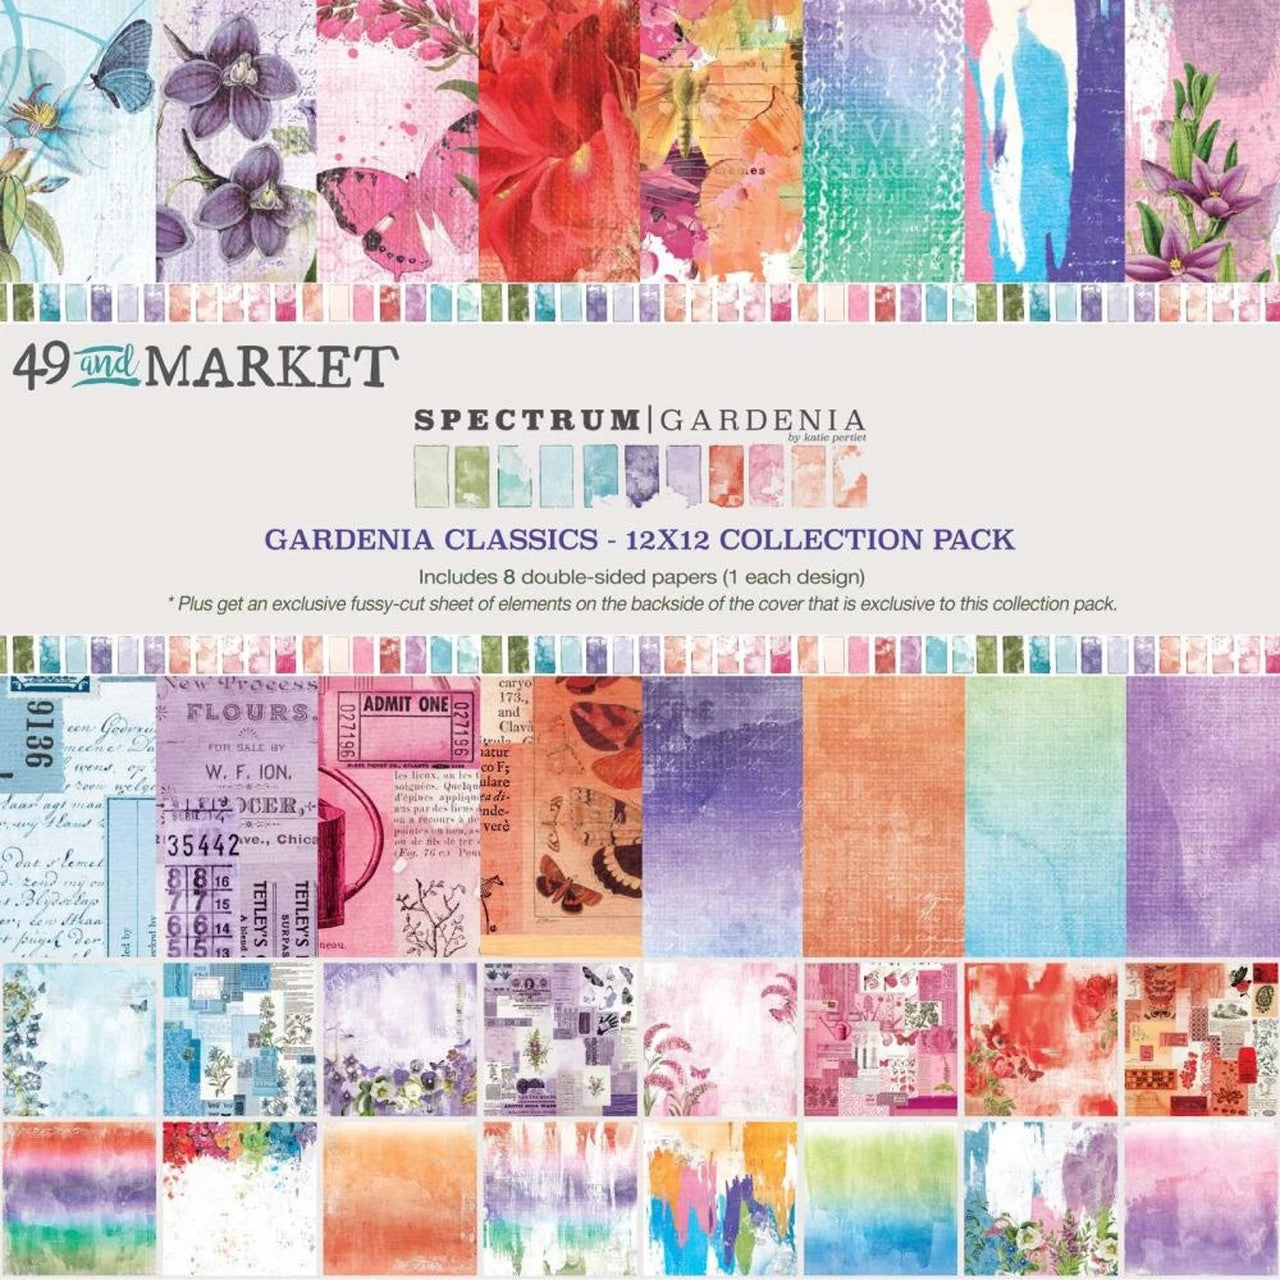 49 en Market Spectrum Gardenia 12x12 Classic Collection Pack